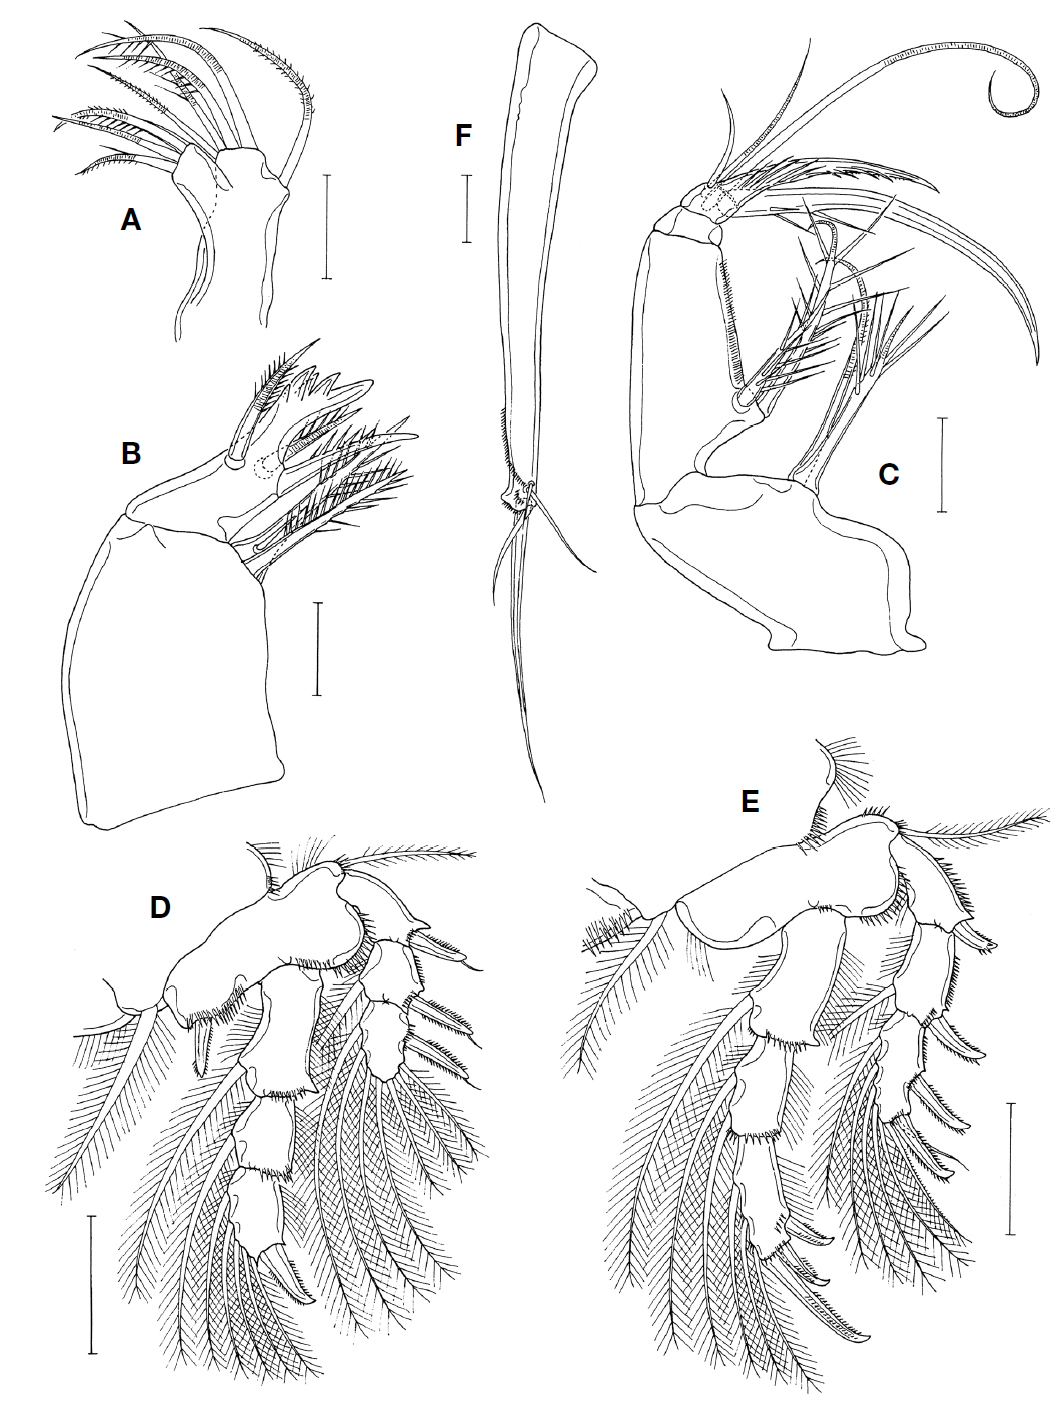 Hamaticyclops ahni n. gen. n. sp., female. A, Maxillule; B, Maxilla; C, Maxilliped; D, Leg 1; E, Leg 2; F, Exopod of leg 5. Scale bars=0.05 mm (A-C), 0.1 mm (D-F).